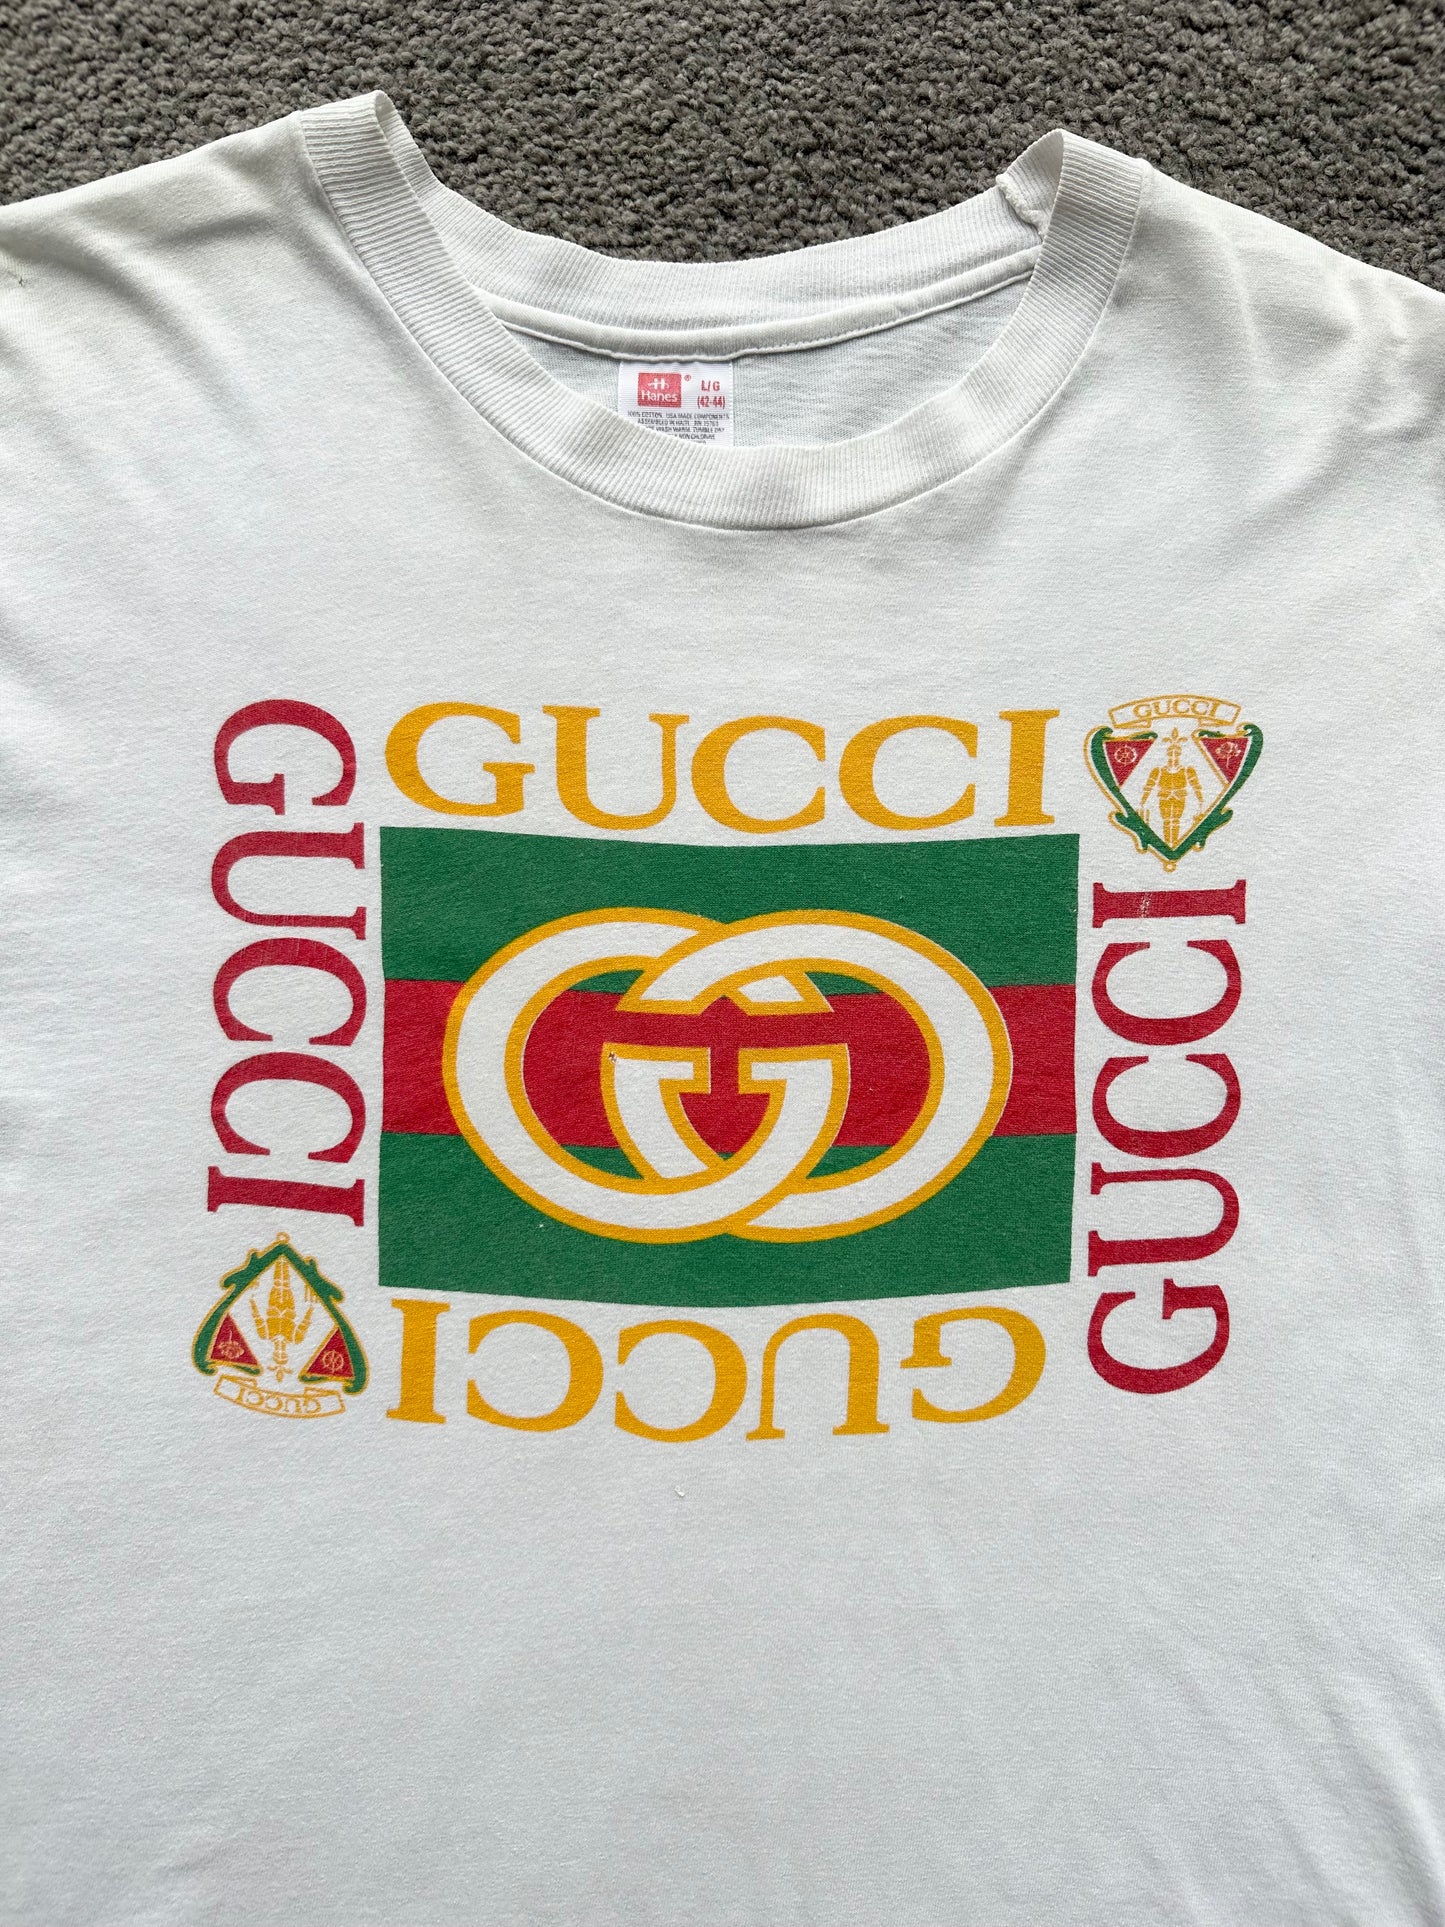 Vintage Gucci Bootleg T-Shirt - M